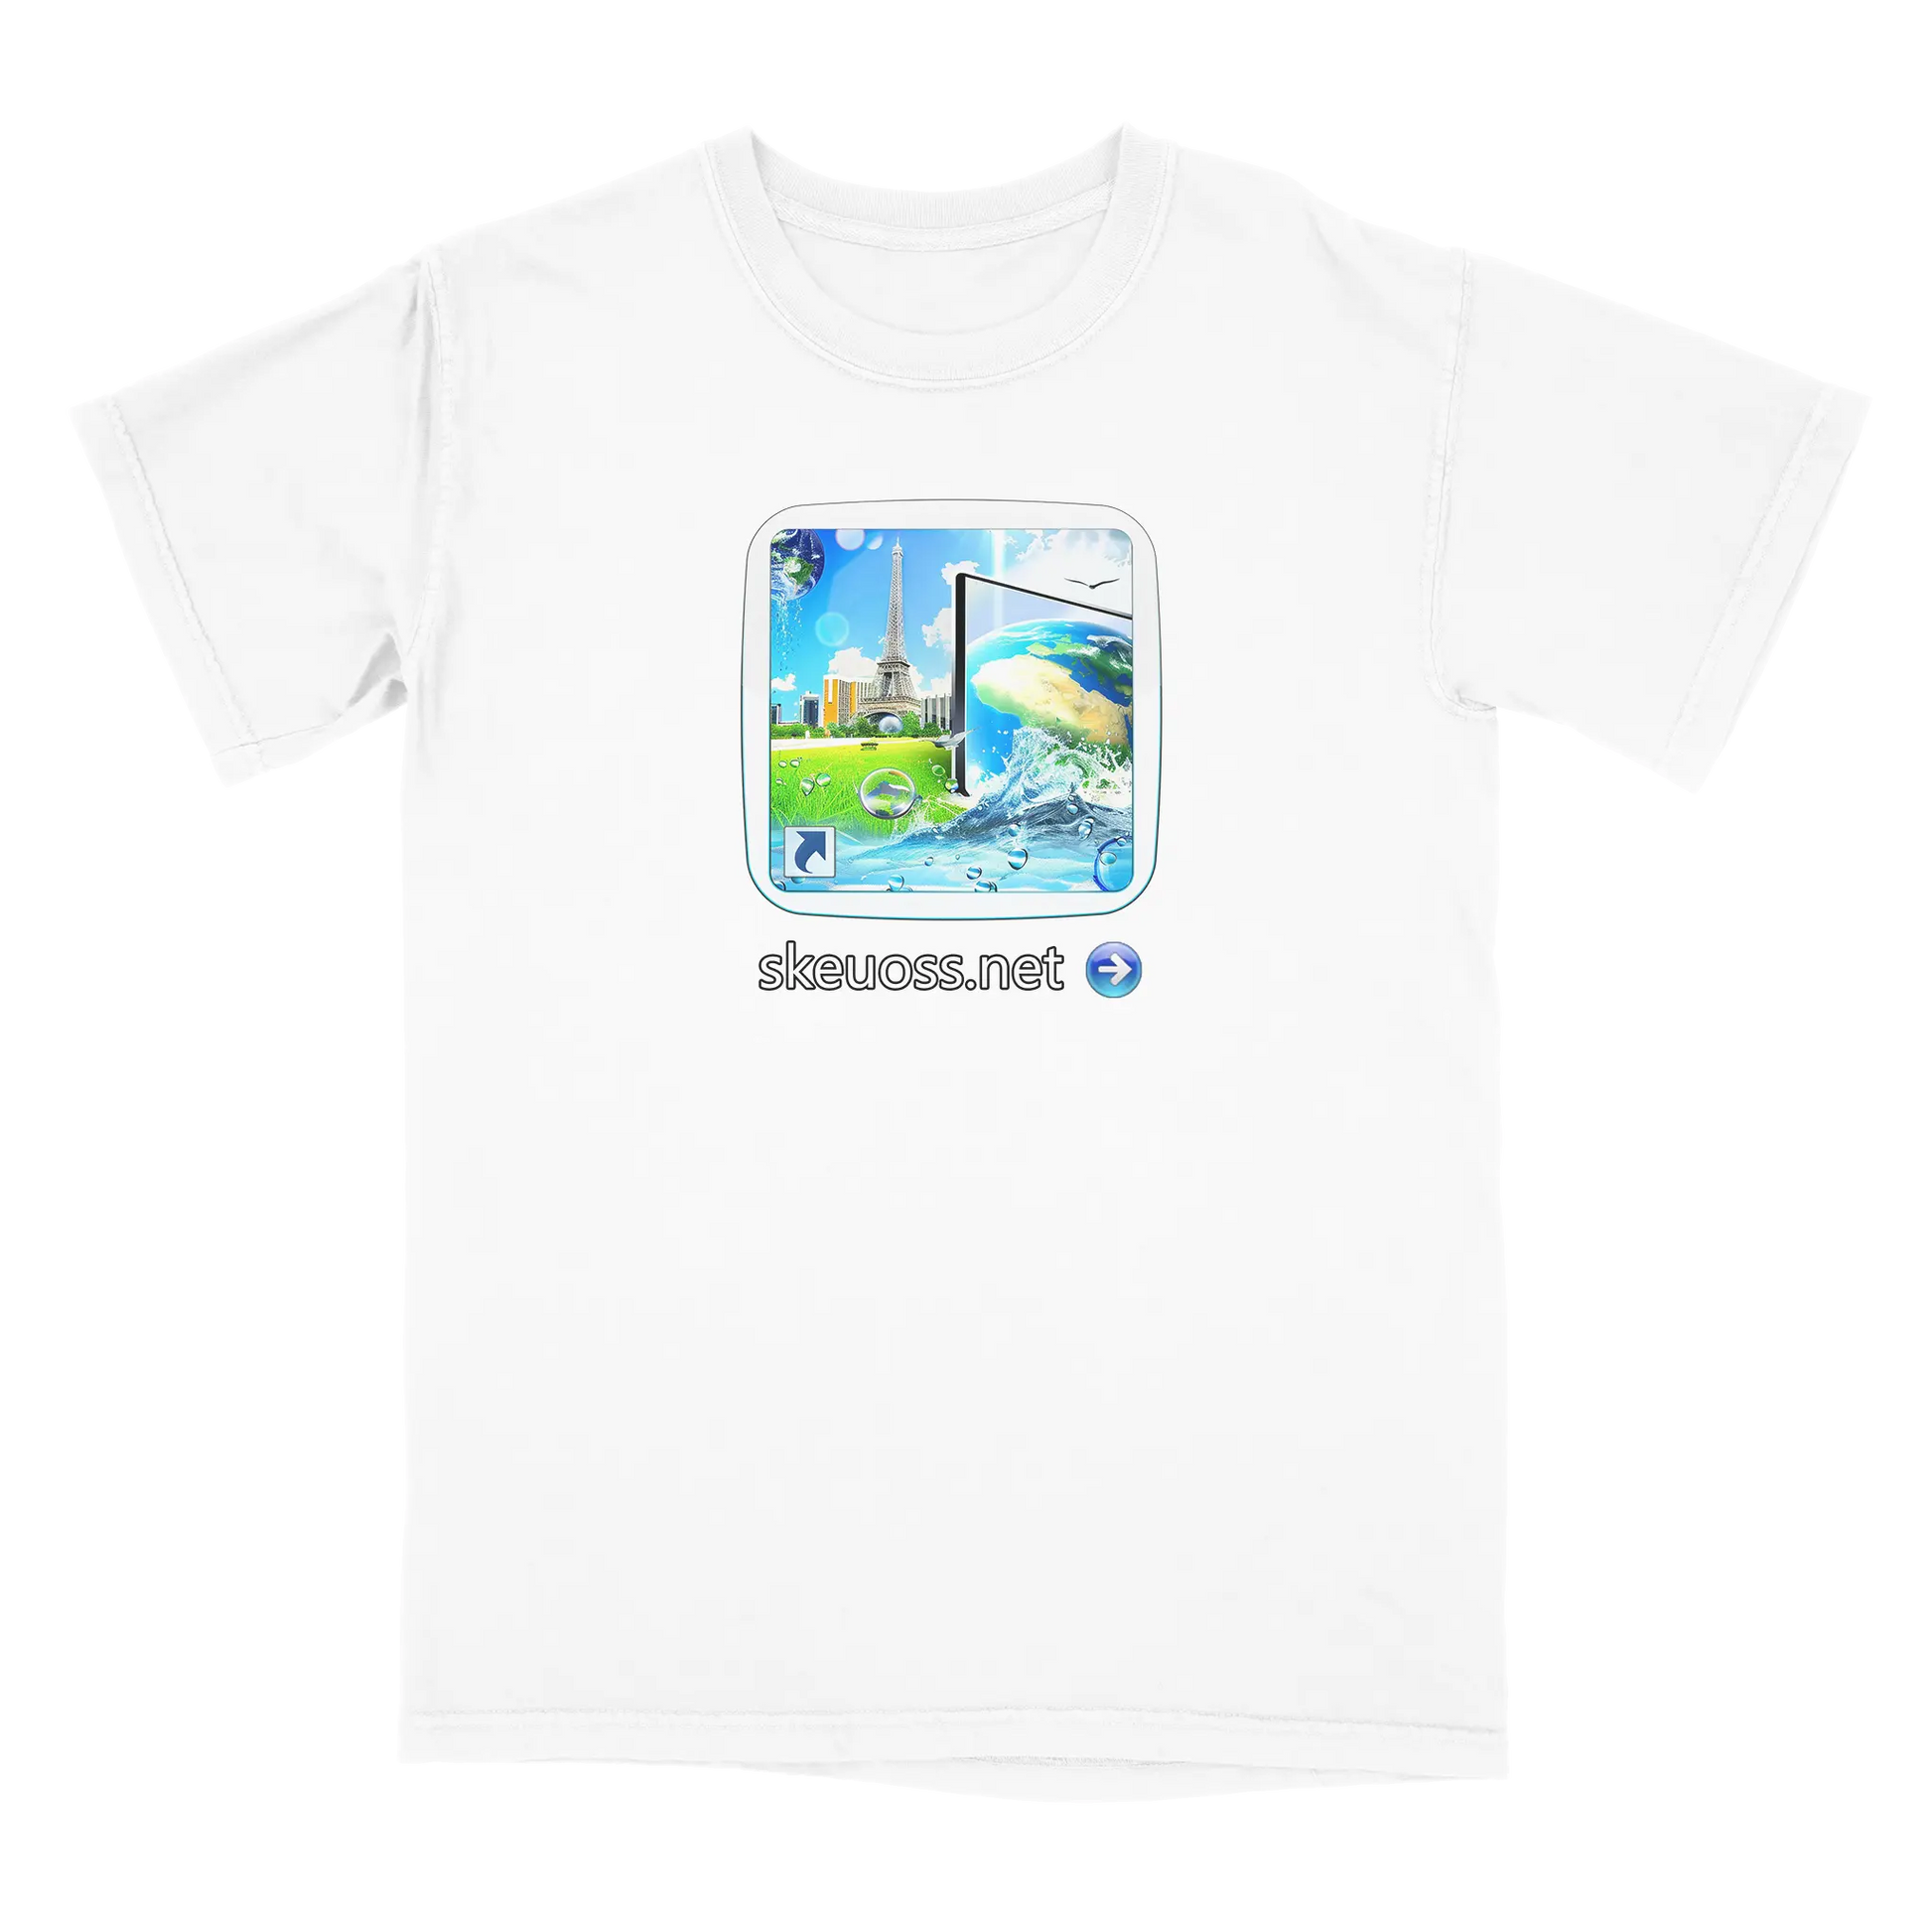 Frutiger Aero T-shirt - User Login Collection - User 173